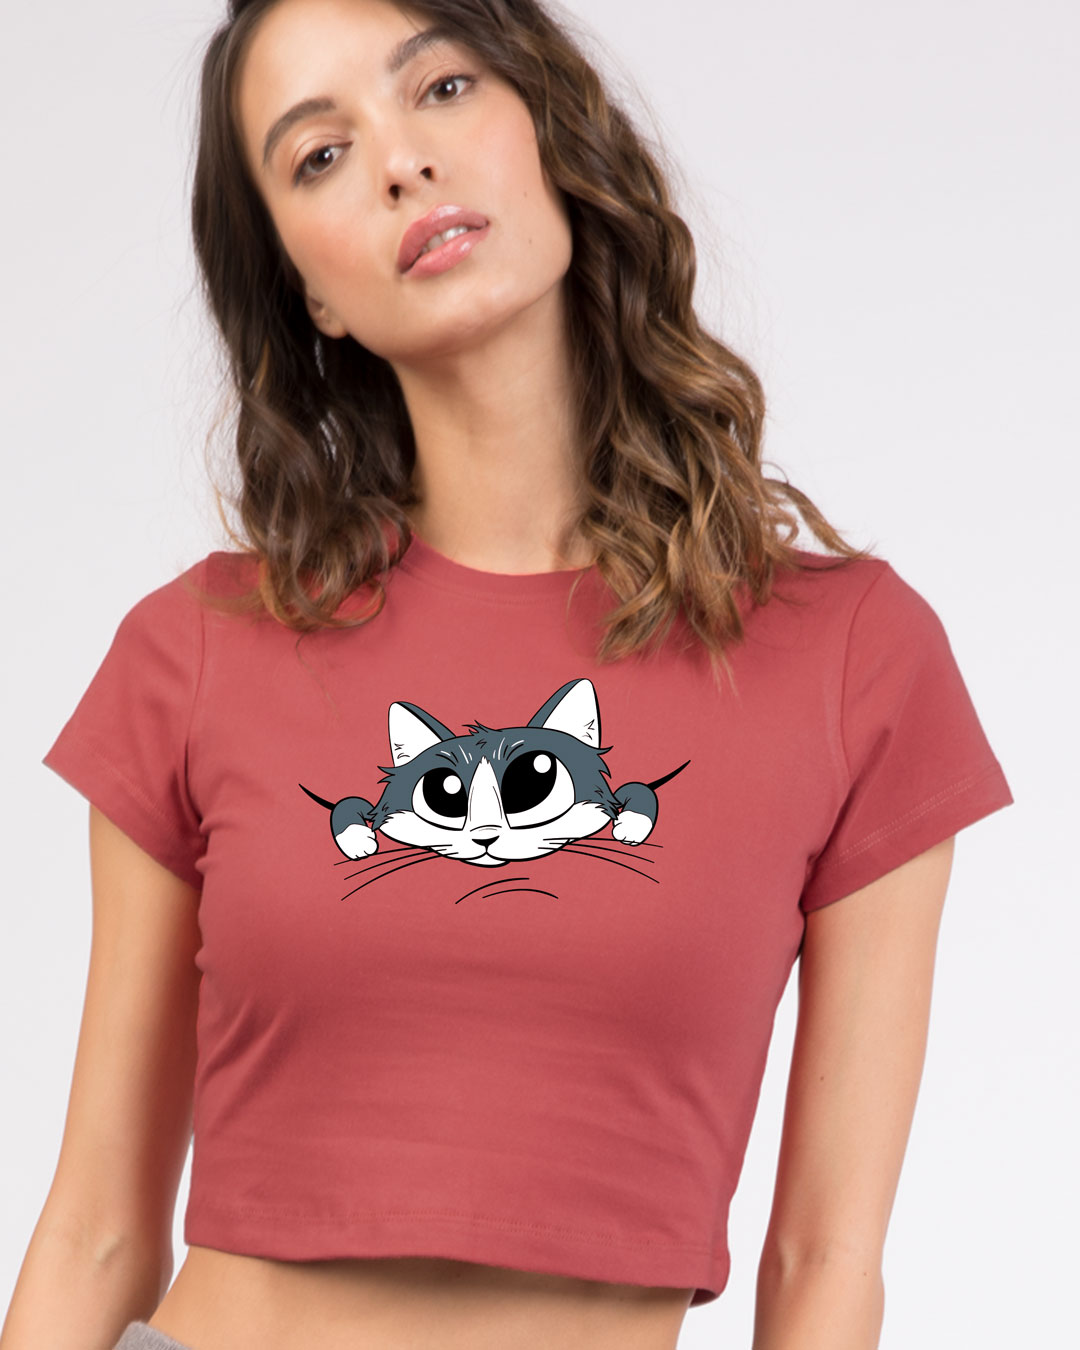 Buy Cute Peeking Cat Round Neck Crop Top T-Shirt for Women red Online ...